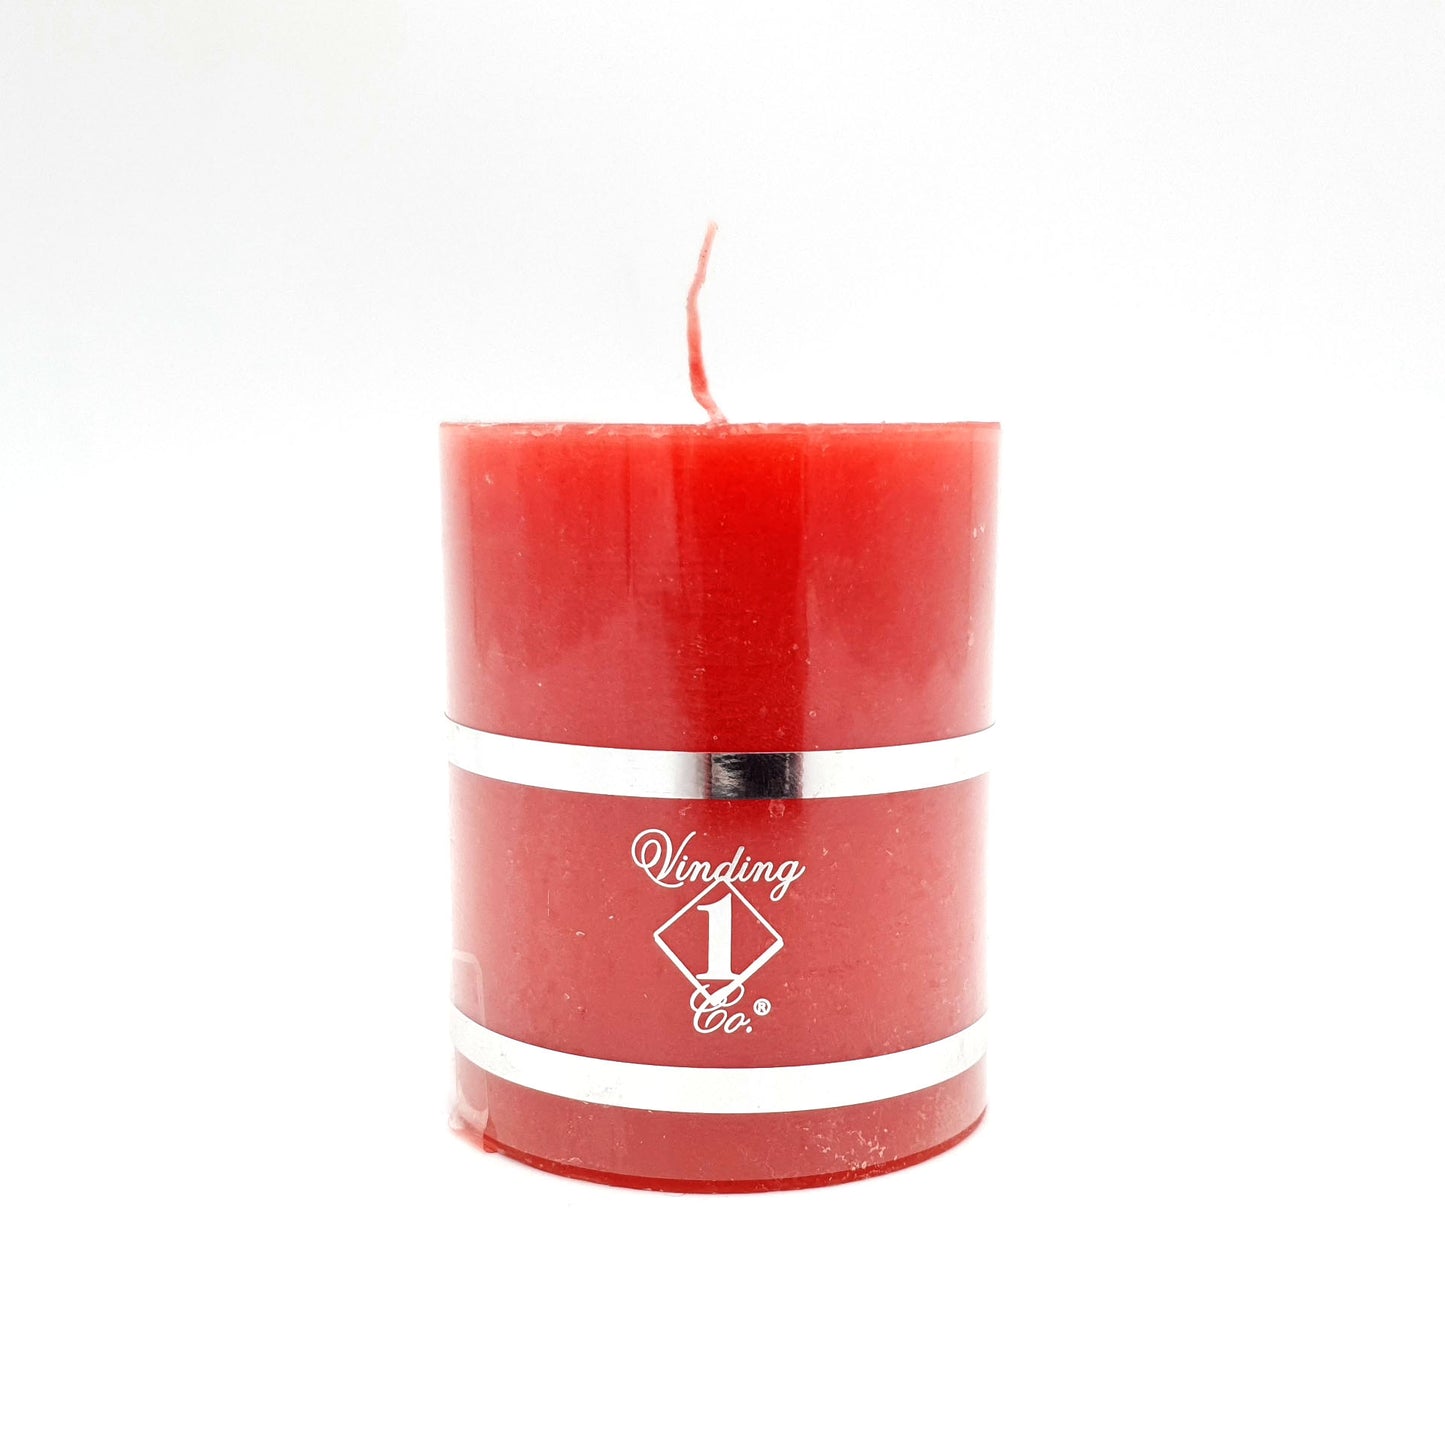 Svece cilindrs "Vinding" ⌀ 7x8.5 cm, sarkana